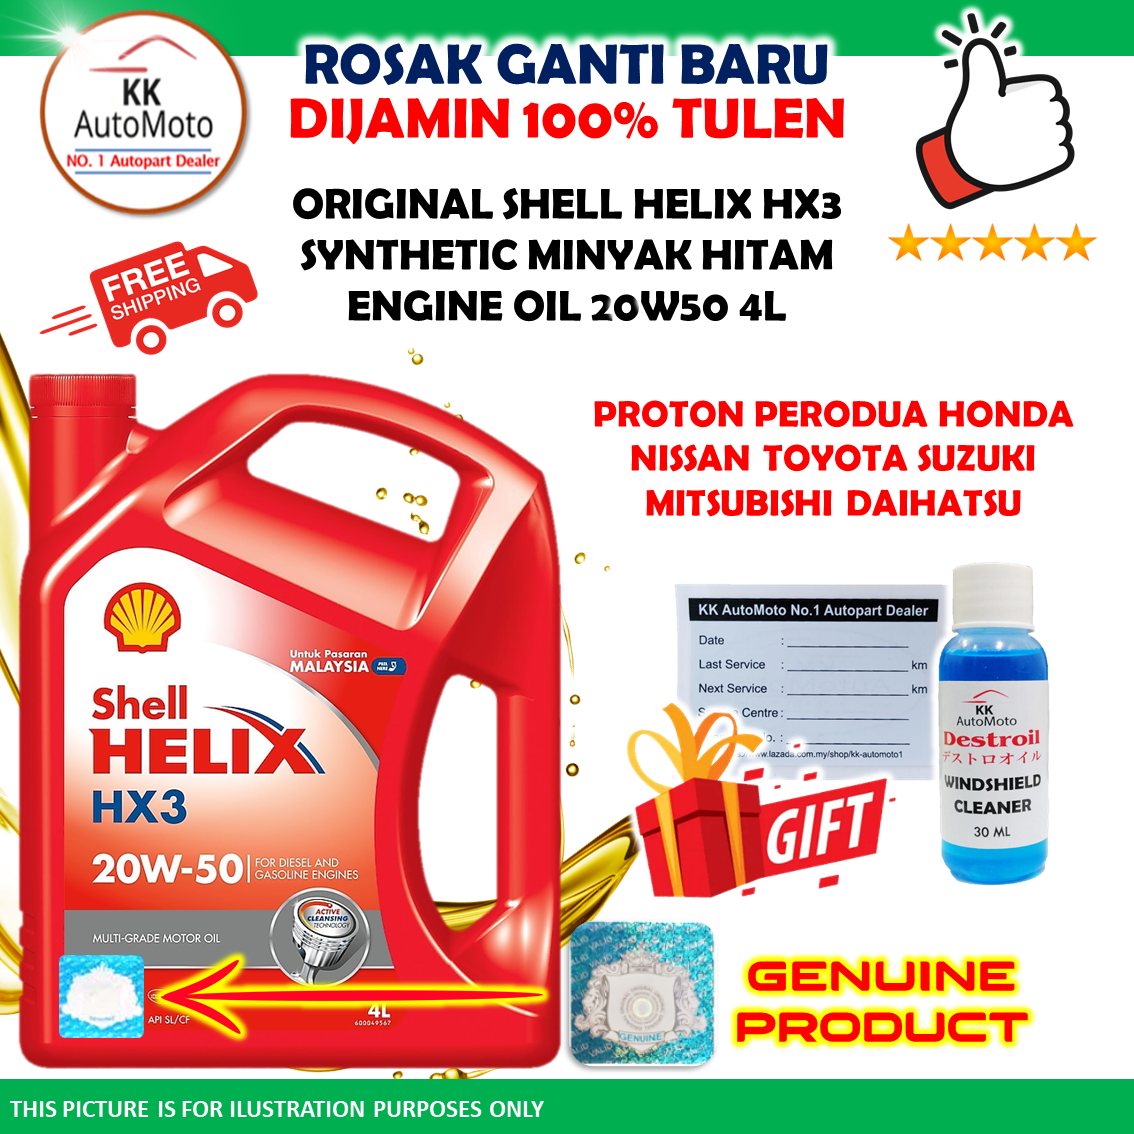 New Original Shell Helix HX3 Mineral Minyak Hitam Engine Oil 20W-50 20W50 20W 50 4L for Proton , Perodua Pasaran Malaysia